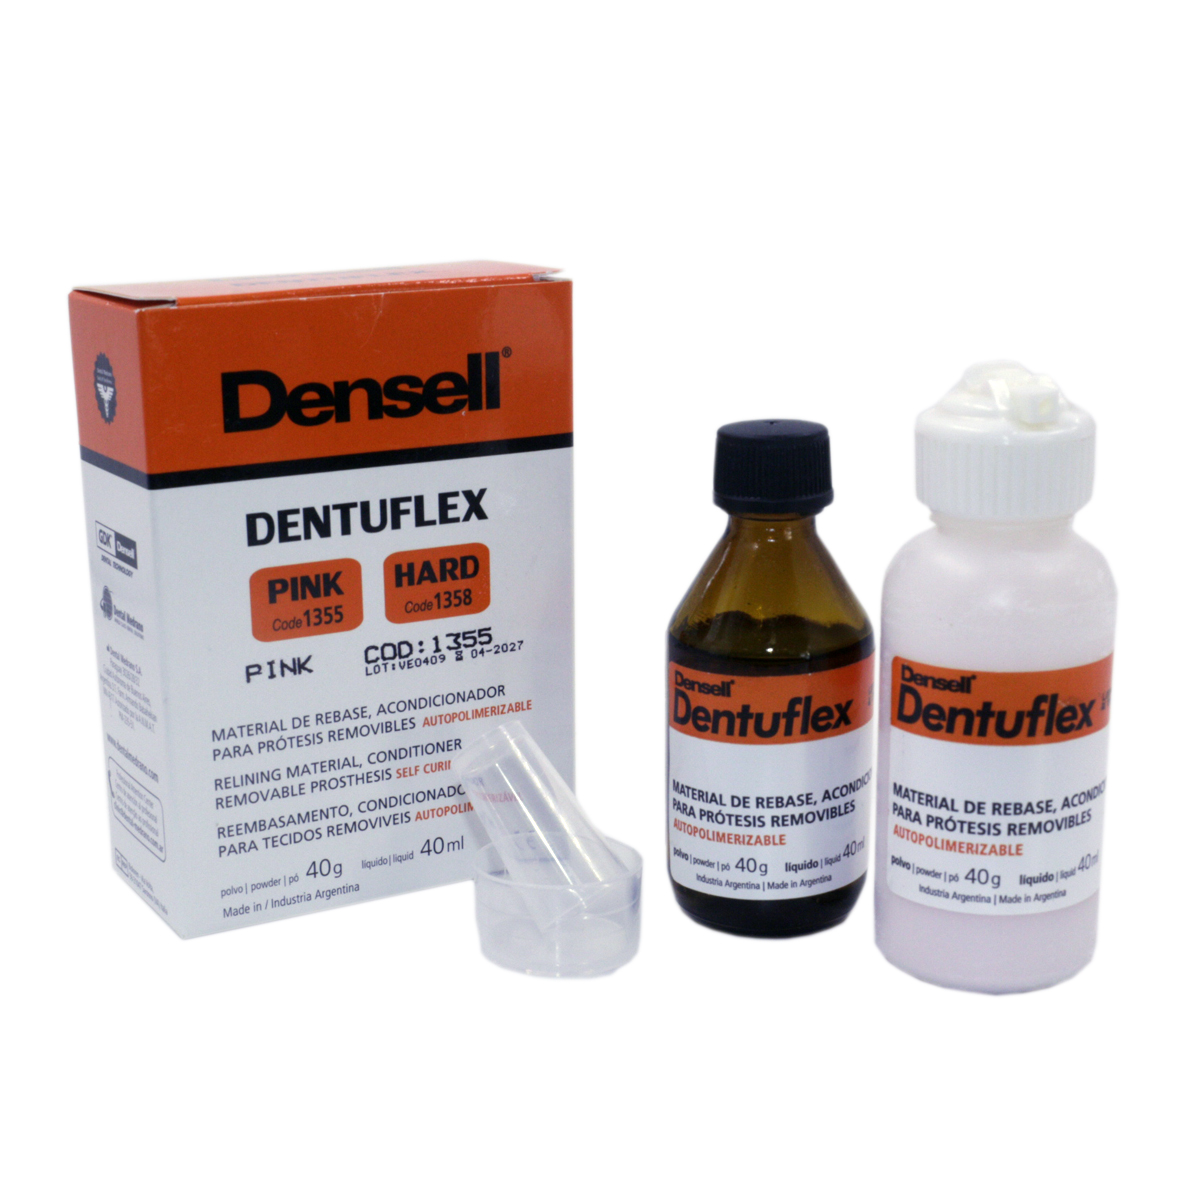 Reembasador Dentuflex  Densell Cor ROSA - Cod.:1355